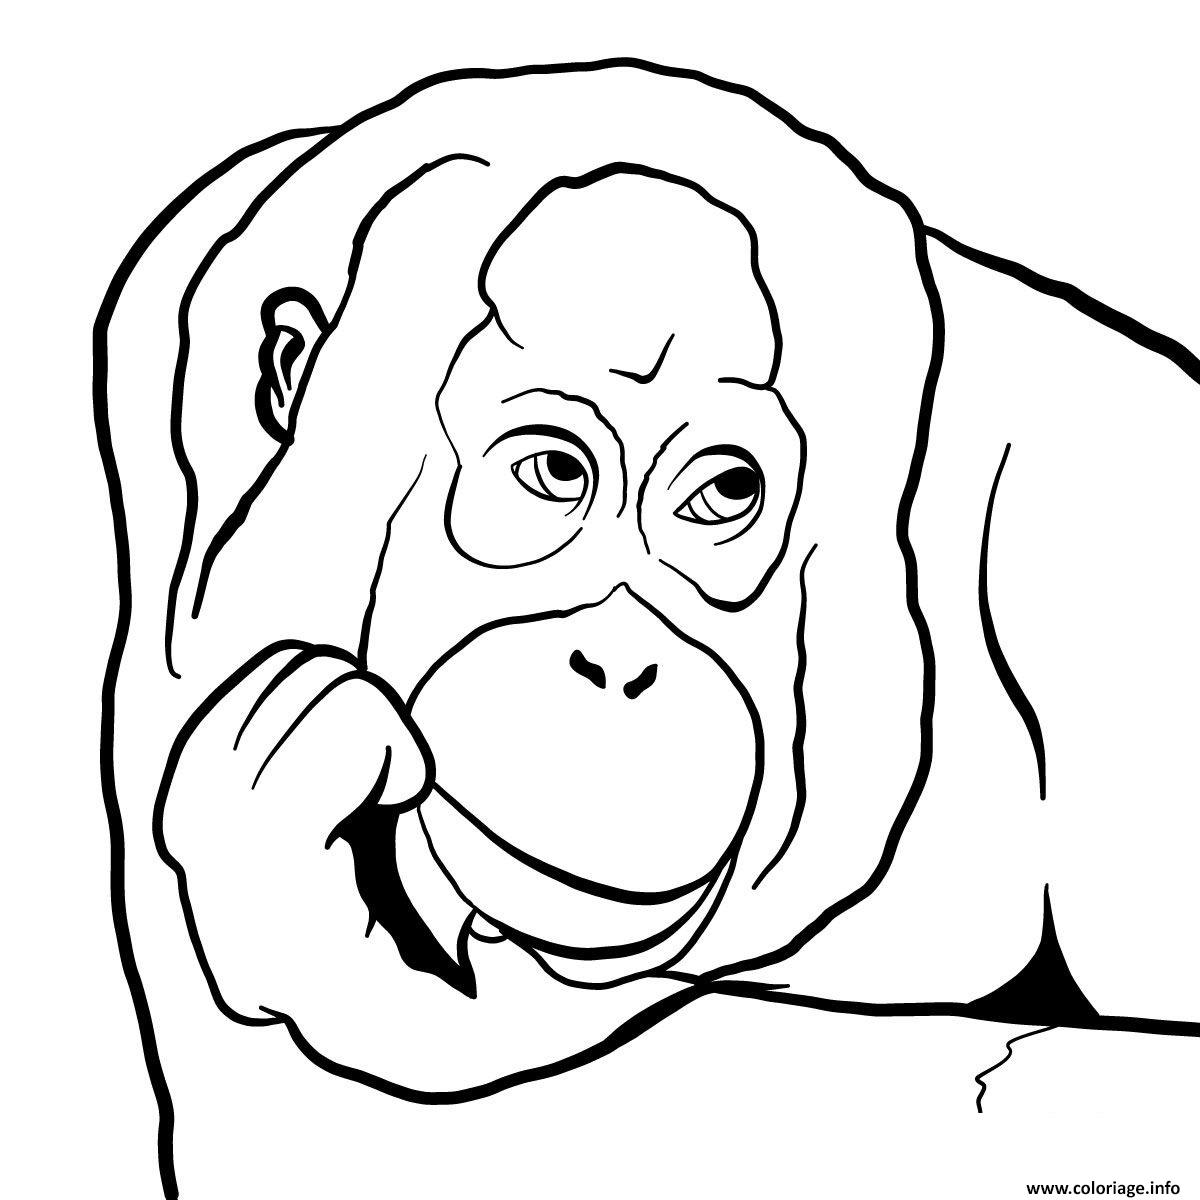 Dessin Orangutan s head Coloriage Gratuit à Imprimer